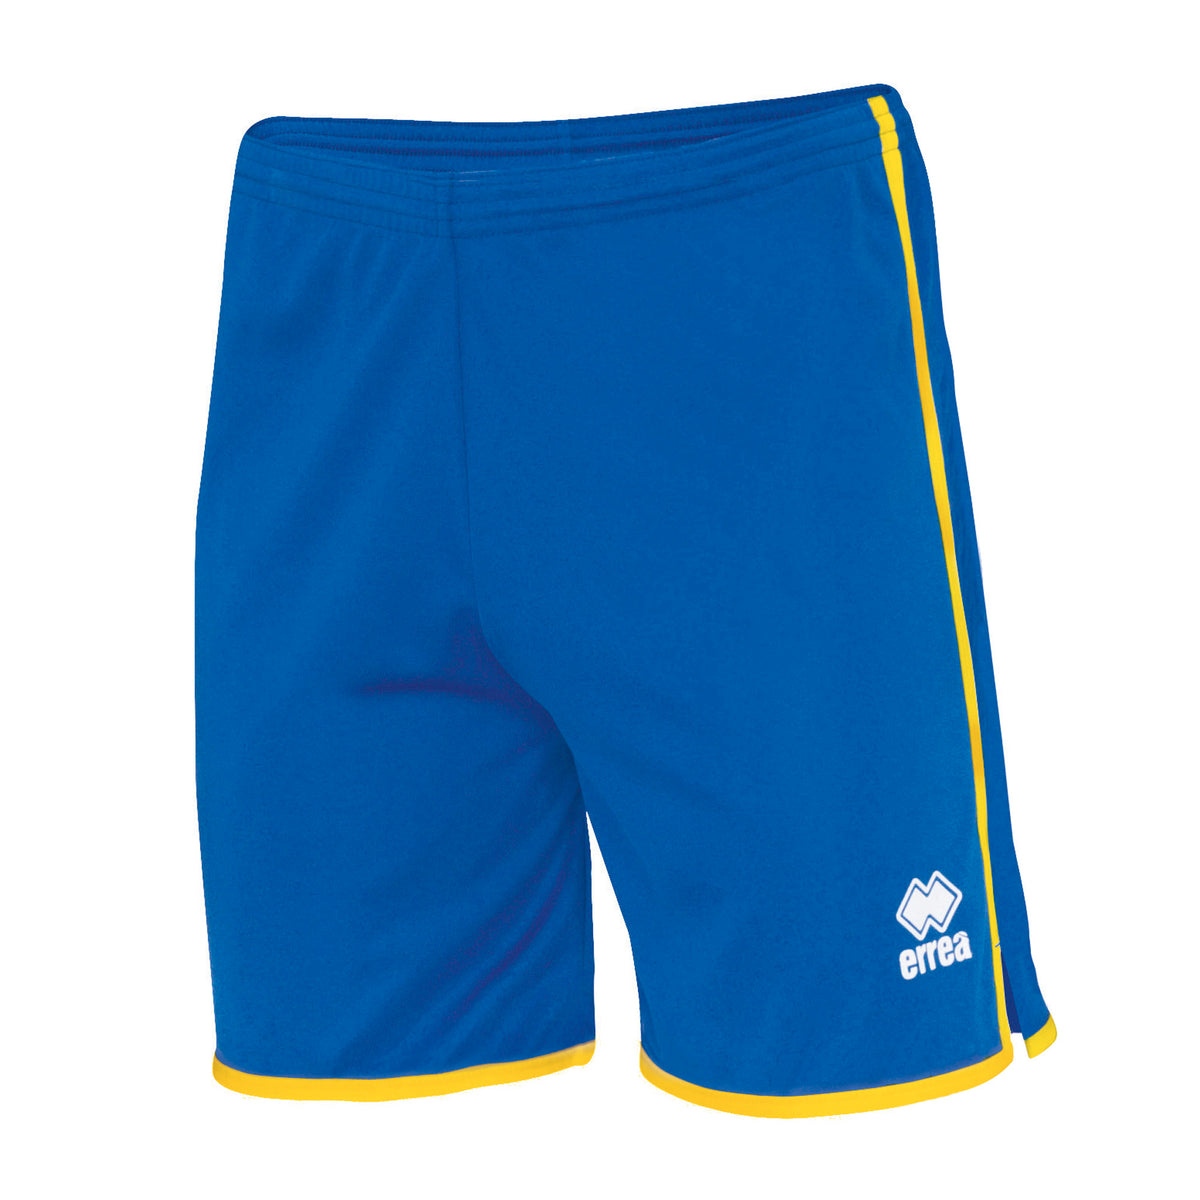 Bonn Shorts in Adult